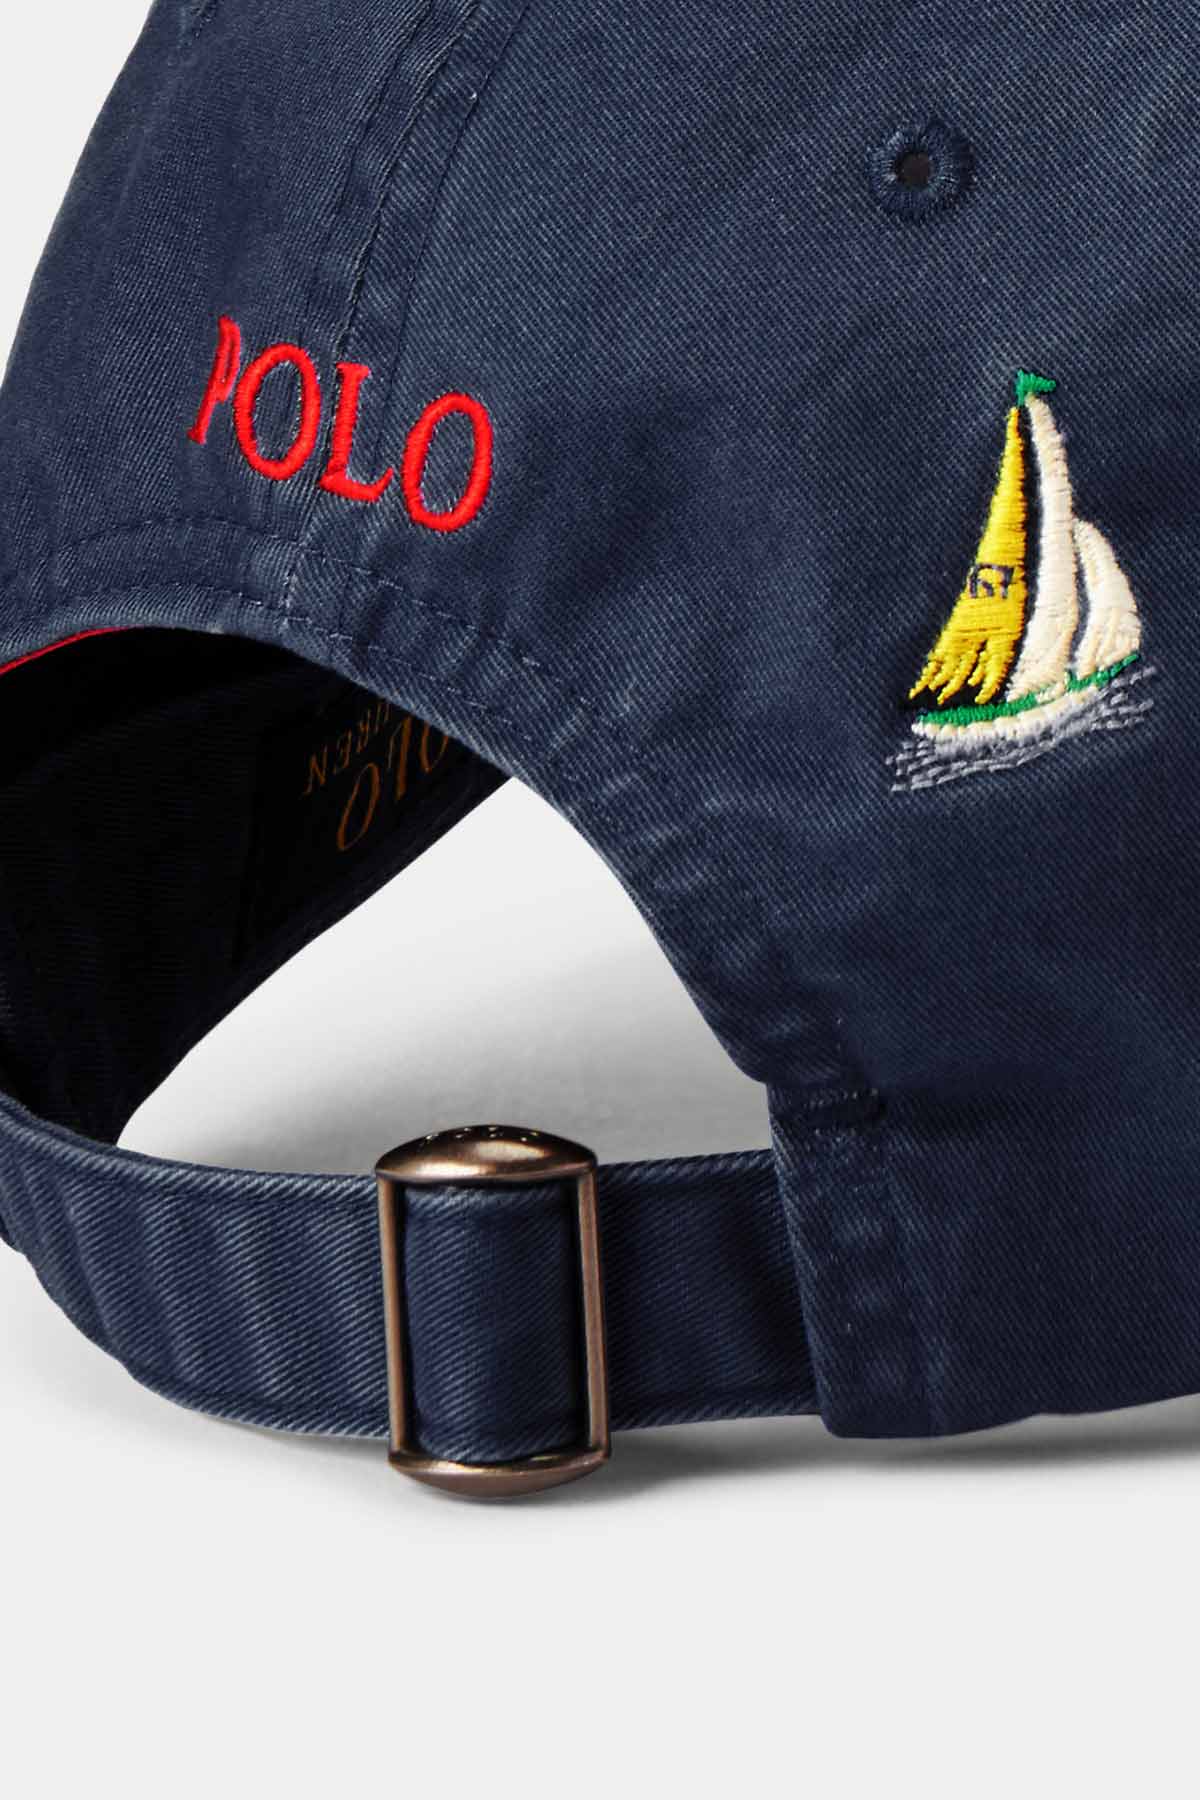 Polo Ralph Lauren Yelken Temalı Şapka-Libas Trendy Fashion Store